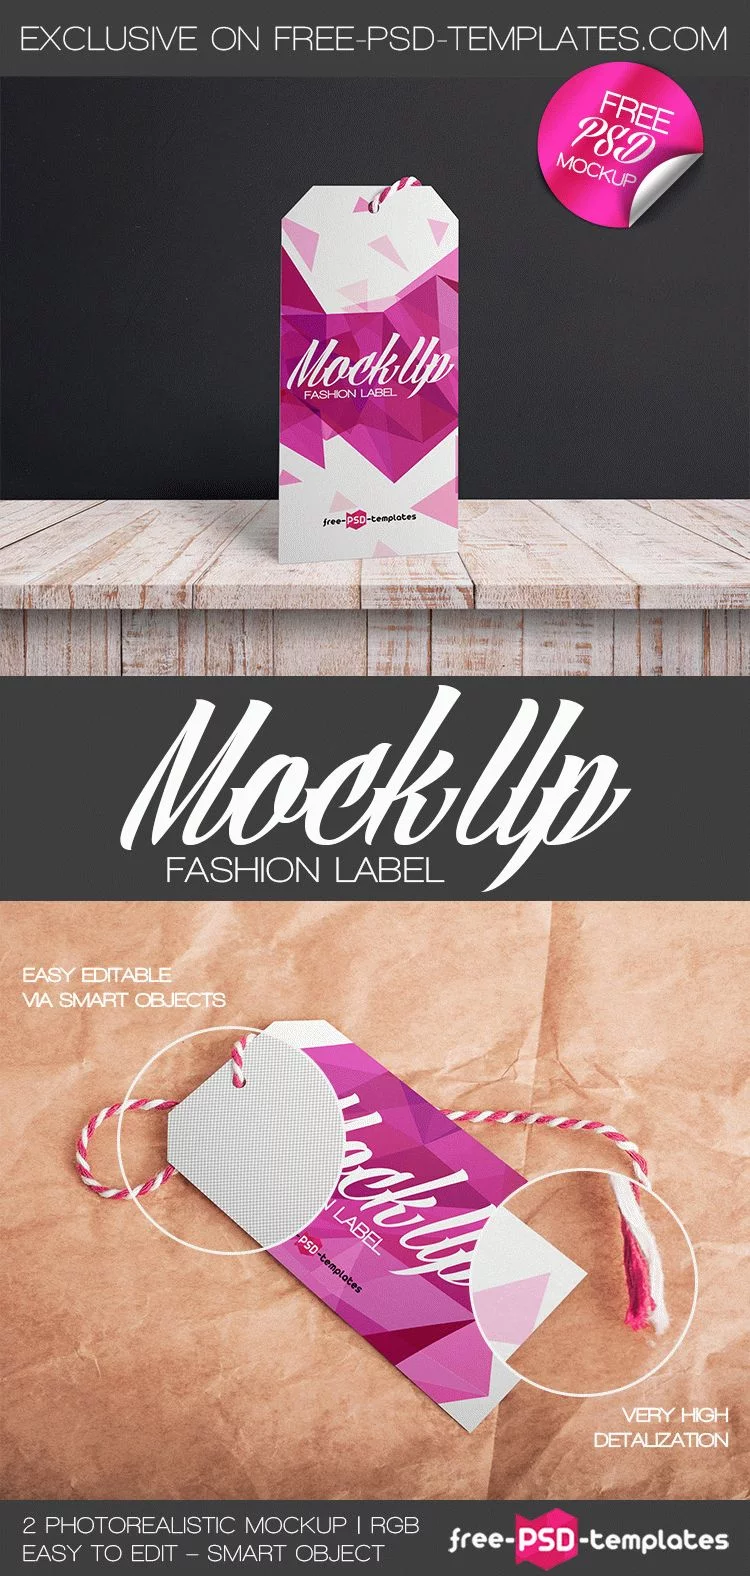 2 Free Fashion Label Mock-ups in PSD